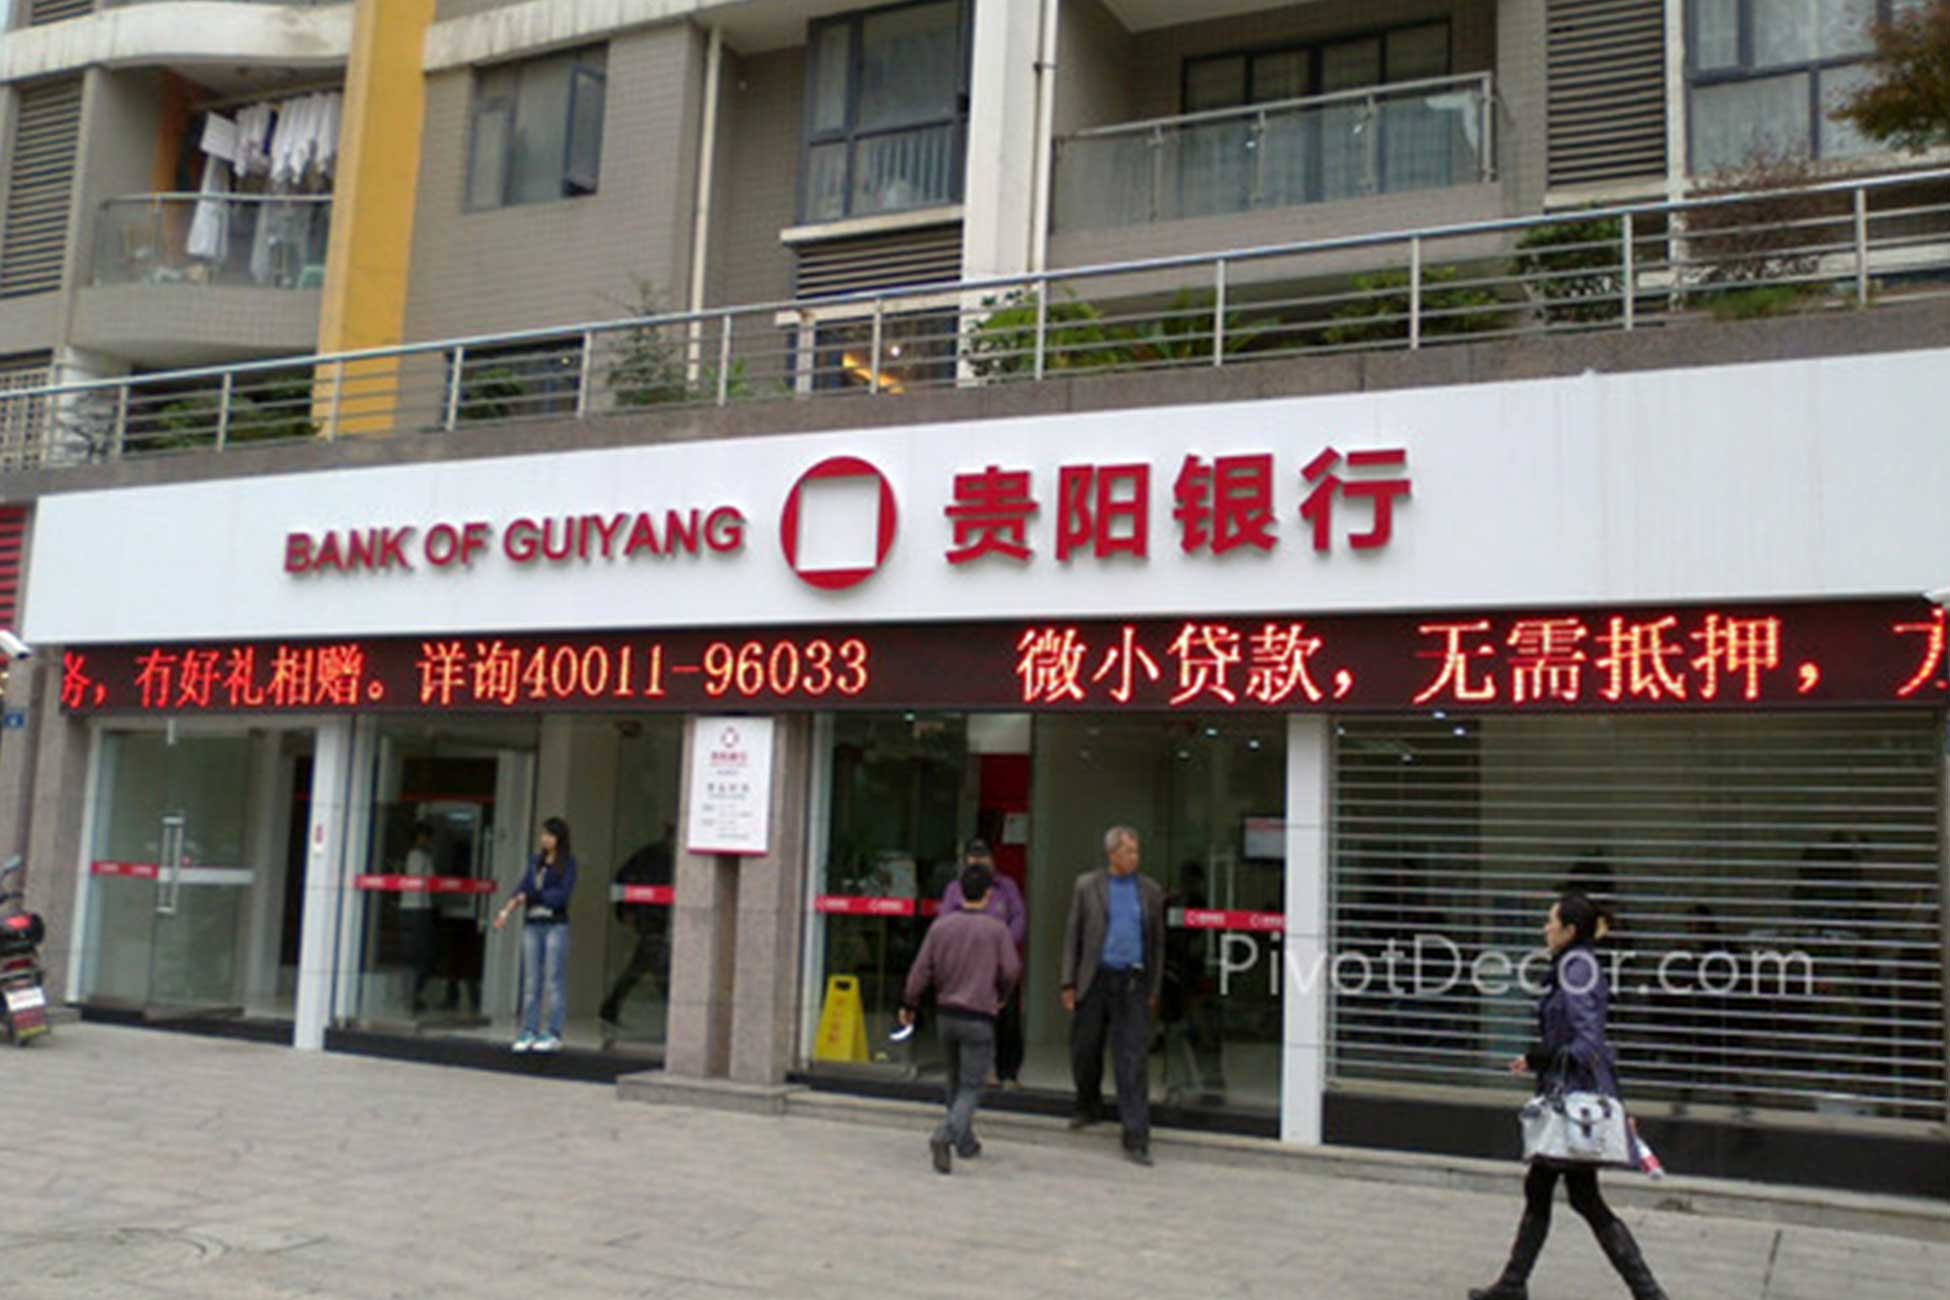 Open a bank account in Guiyang